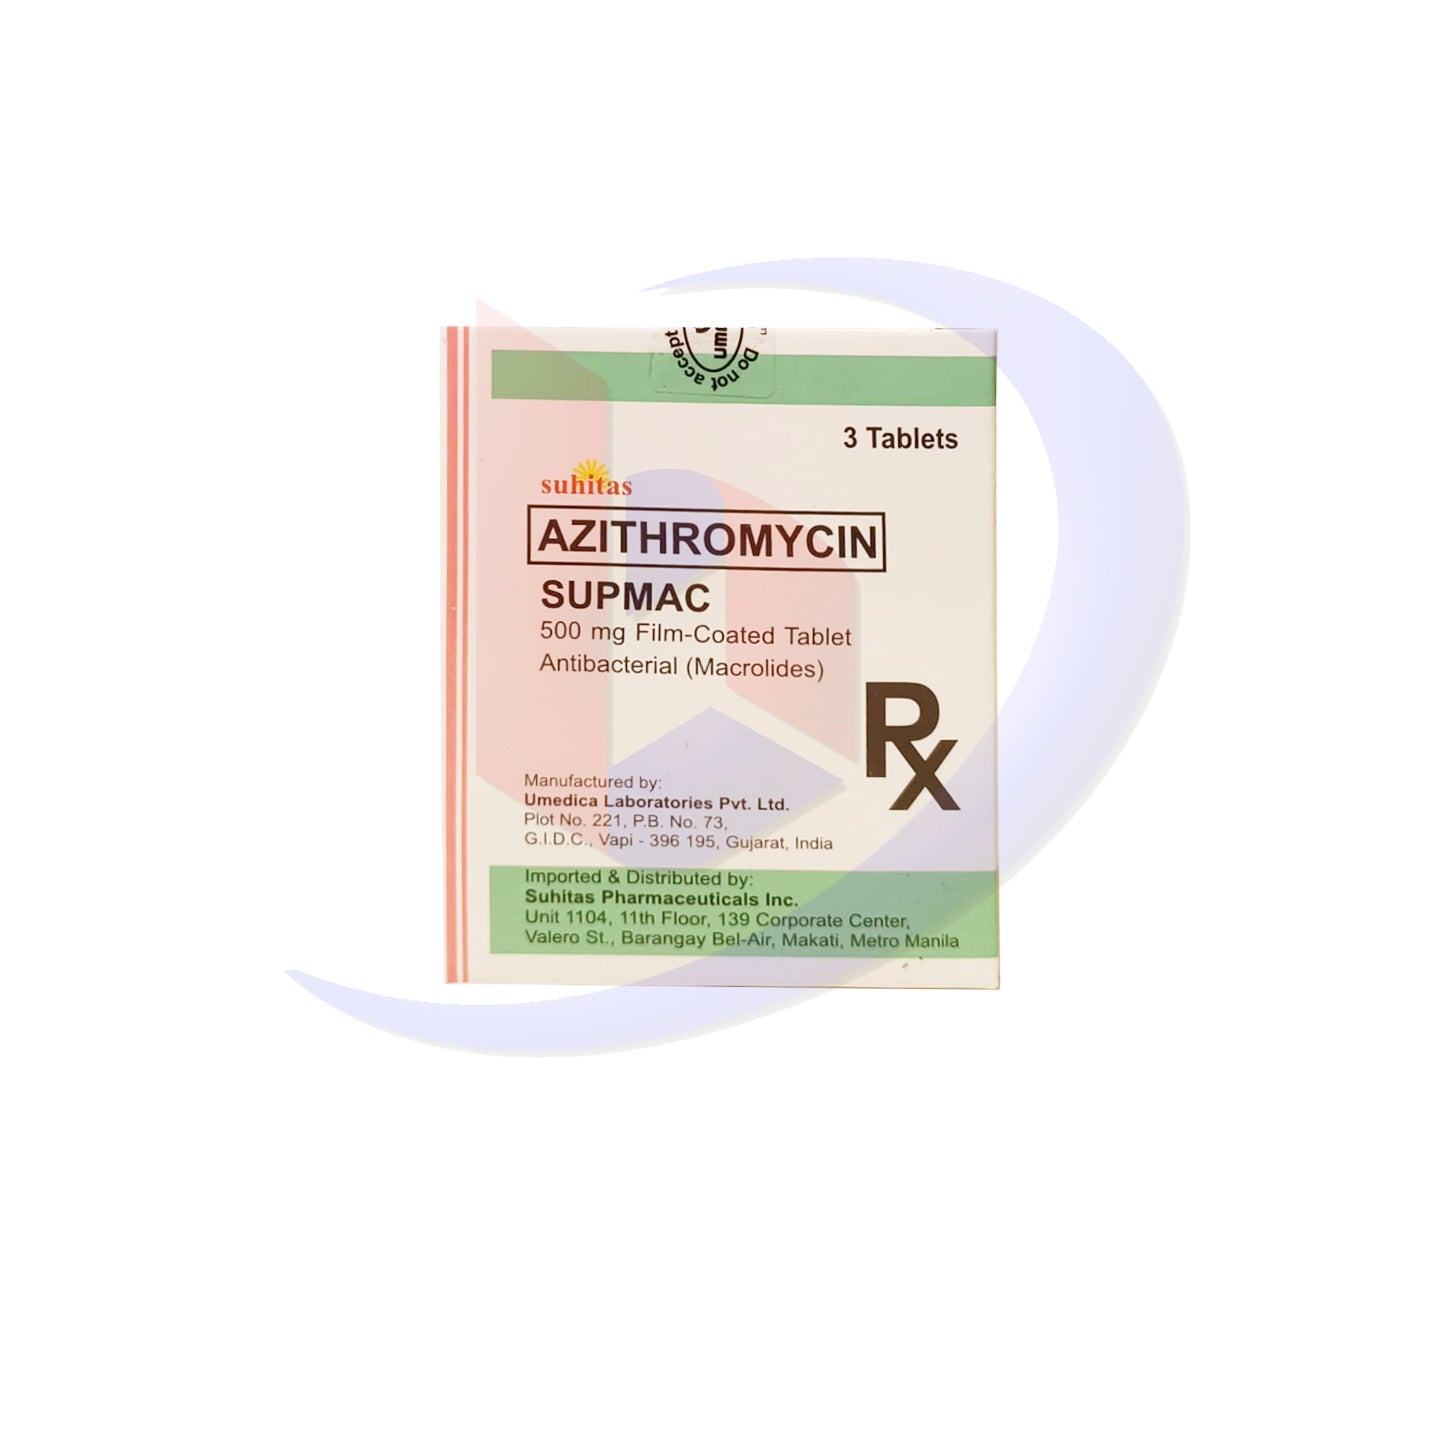 Azithromycin (Supmac) 500mg Film Coated Antibacterial Tablet 3's